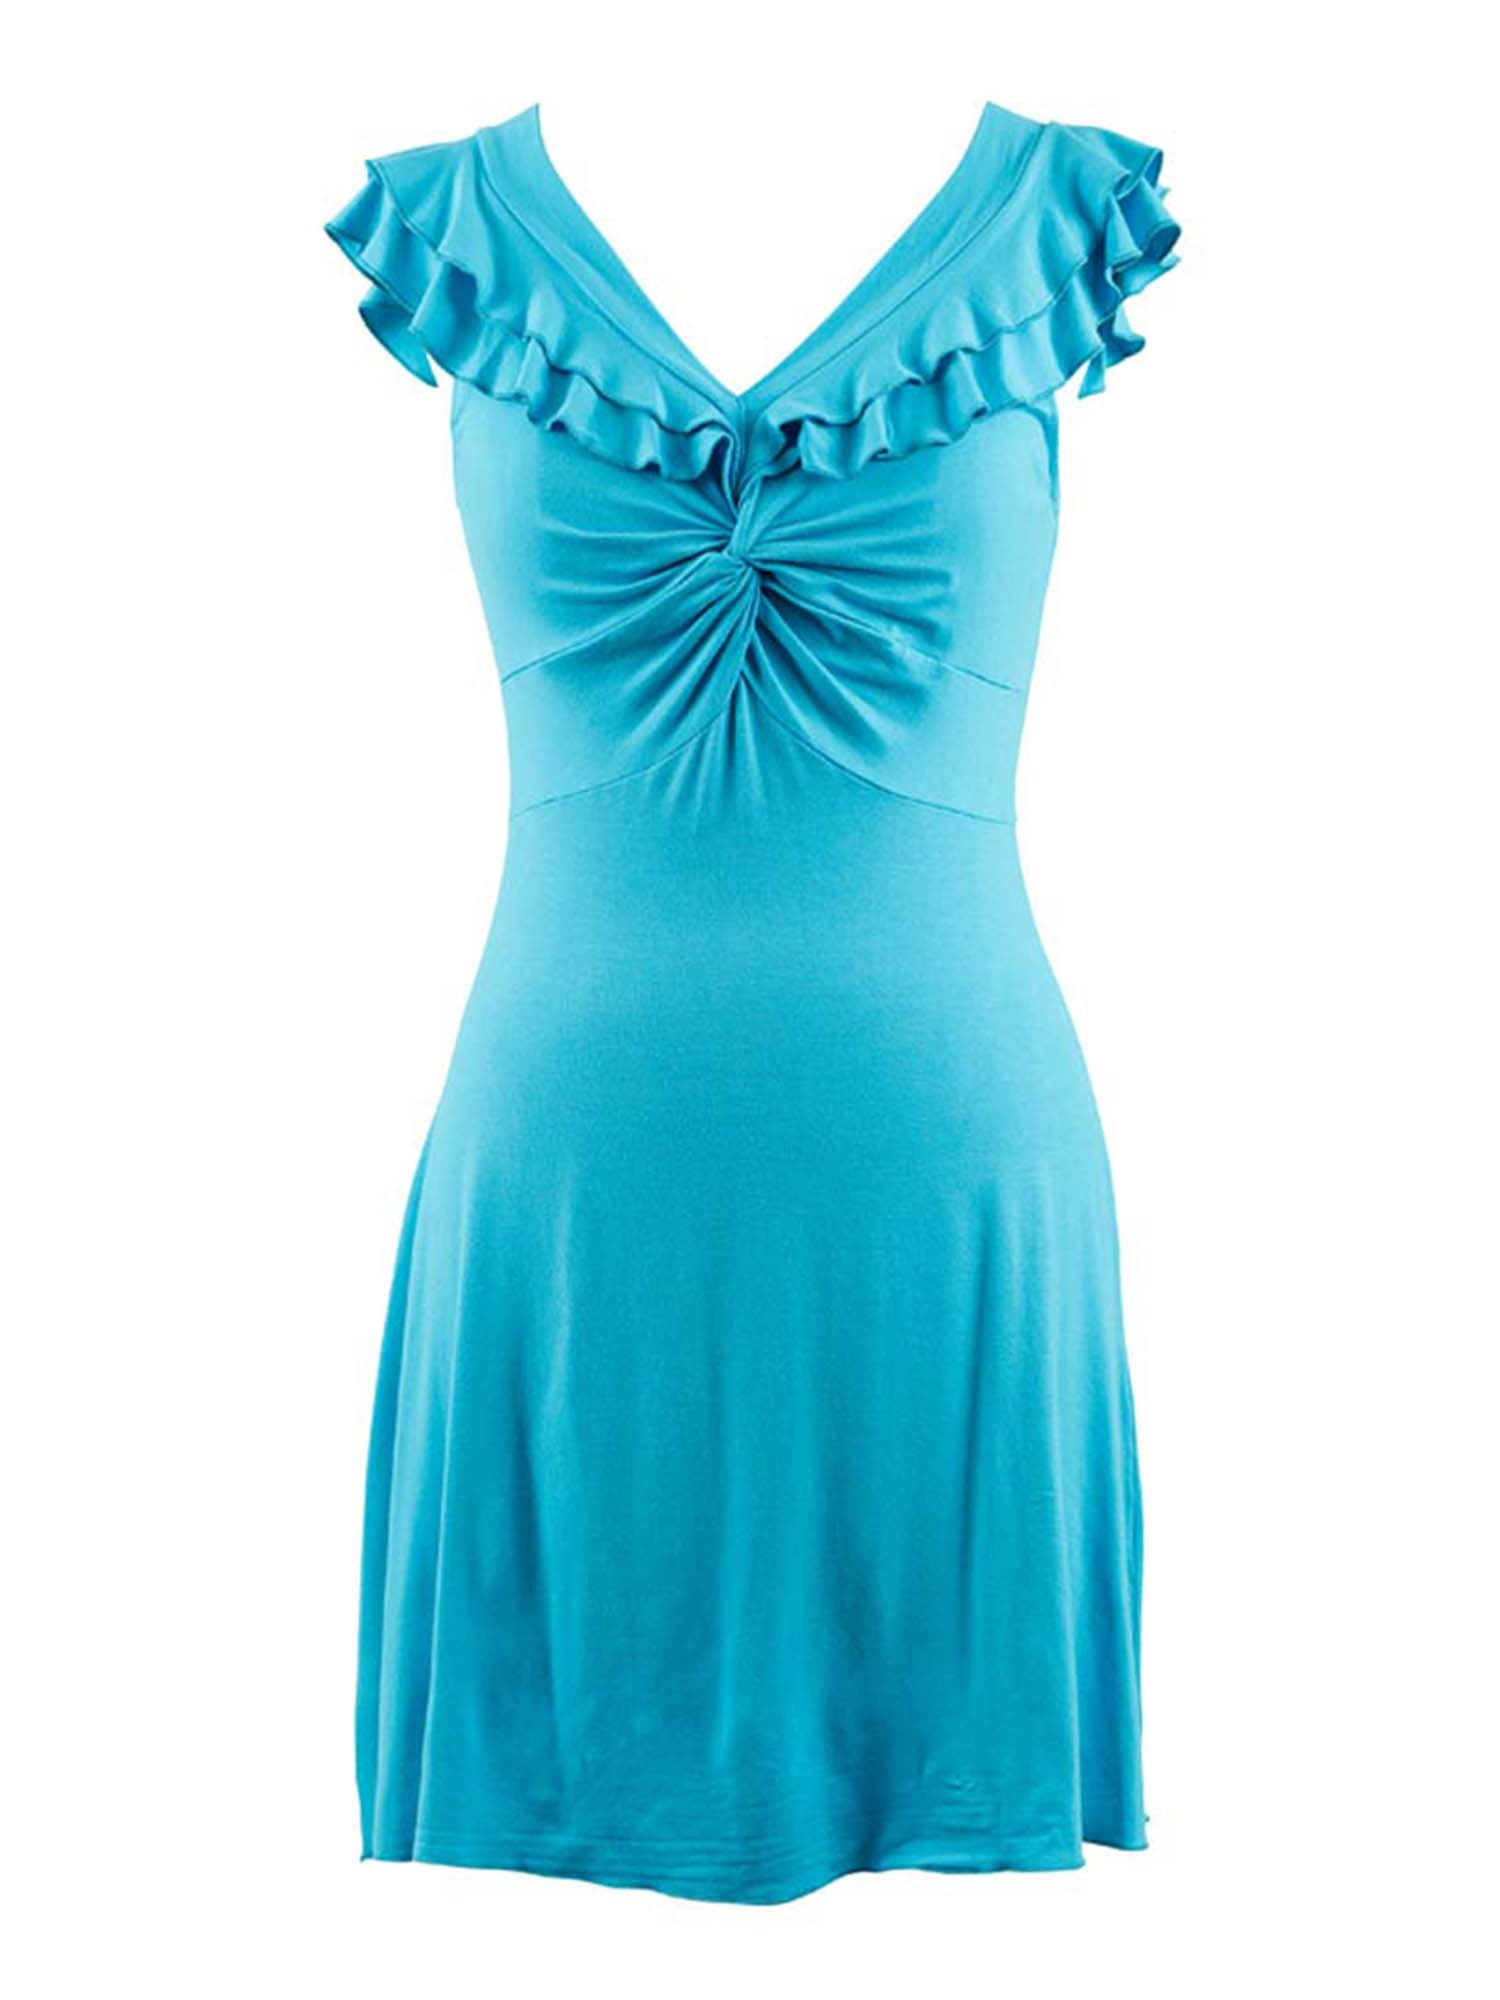 Turquoise Blue Ruffled Top V-Neck Sleeveless Casual Dress Size Large -  Walmart.com